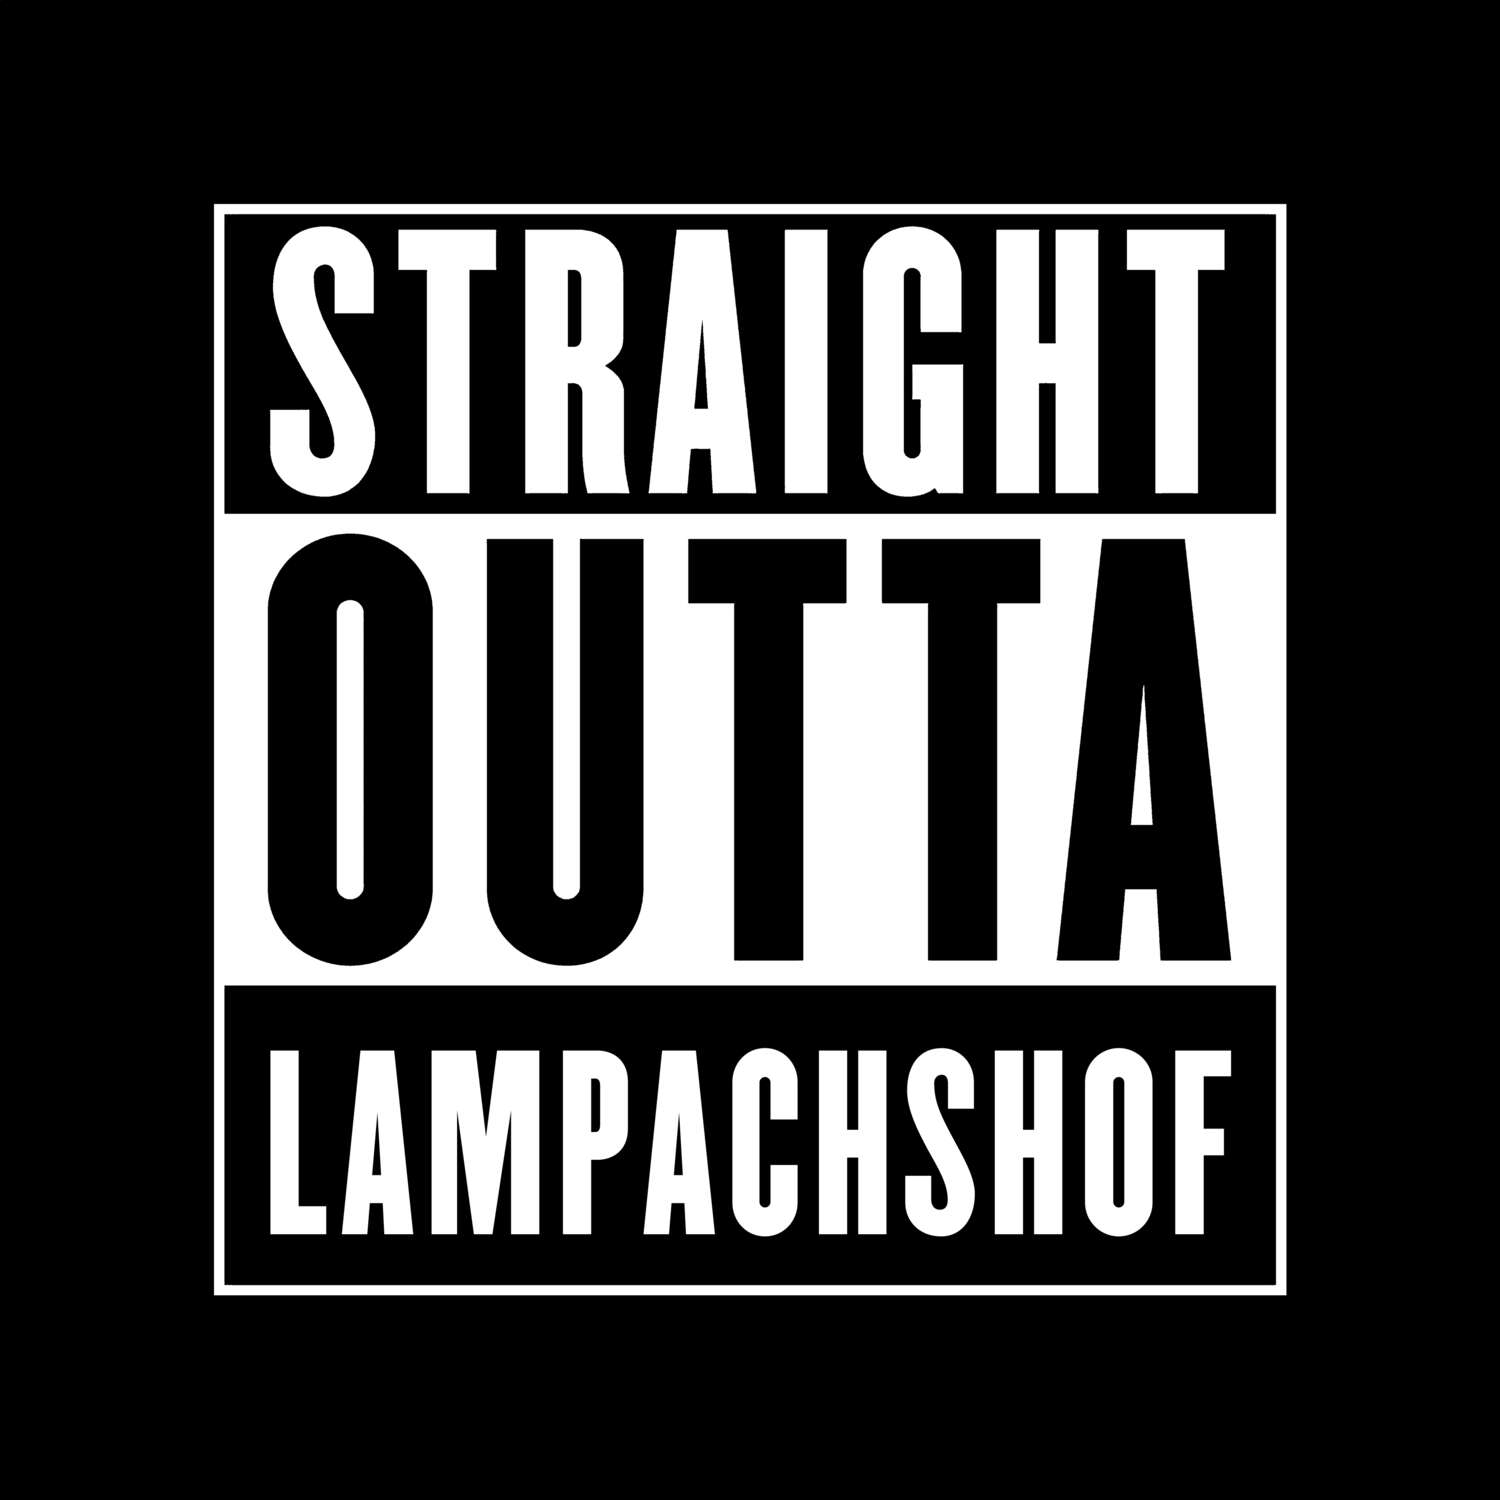 Lampachshof T-Shirt »Straight Outta«